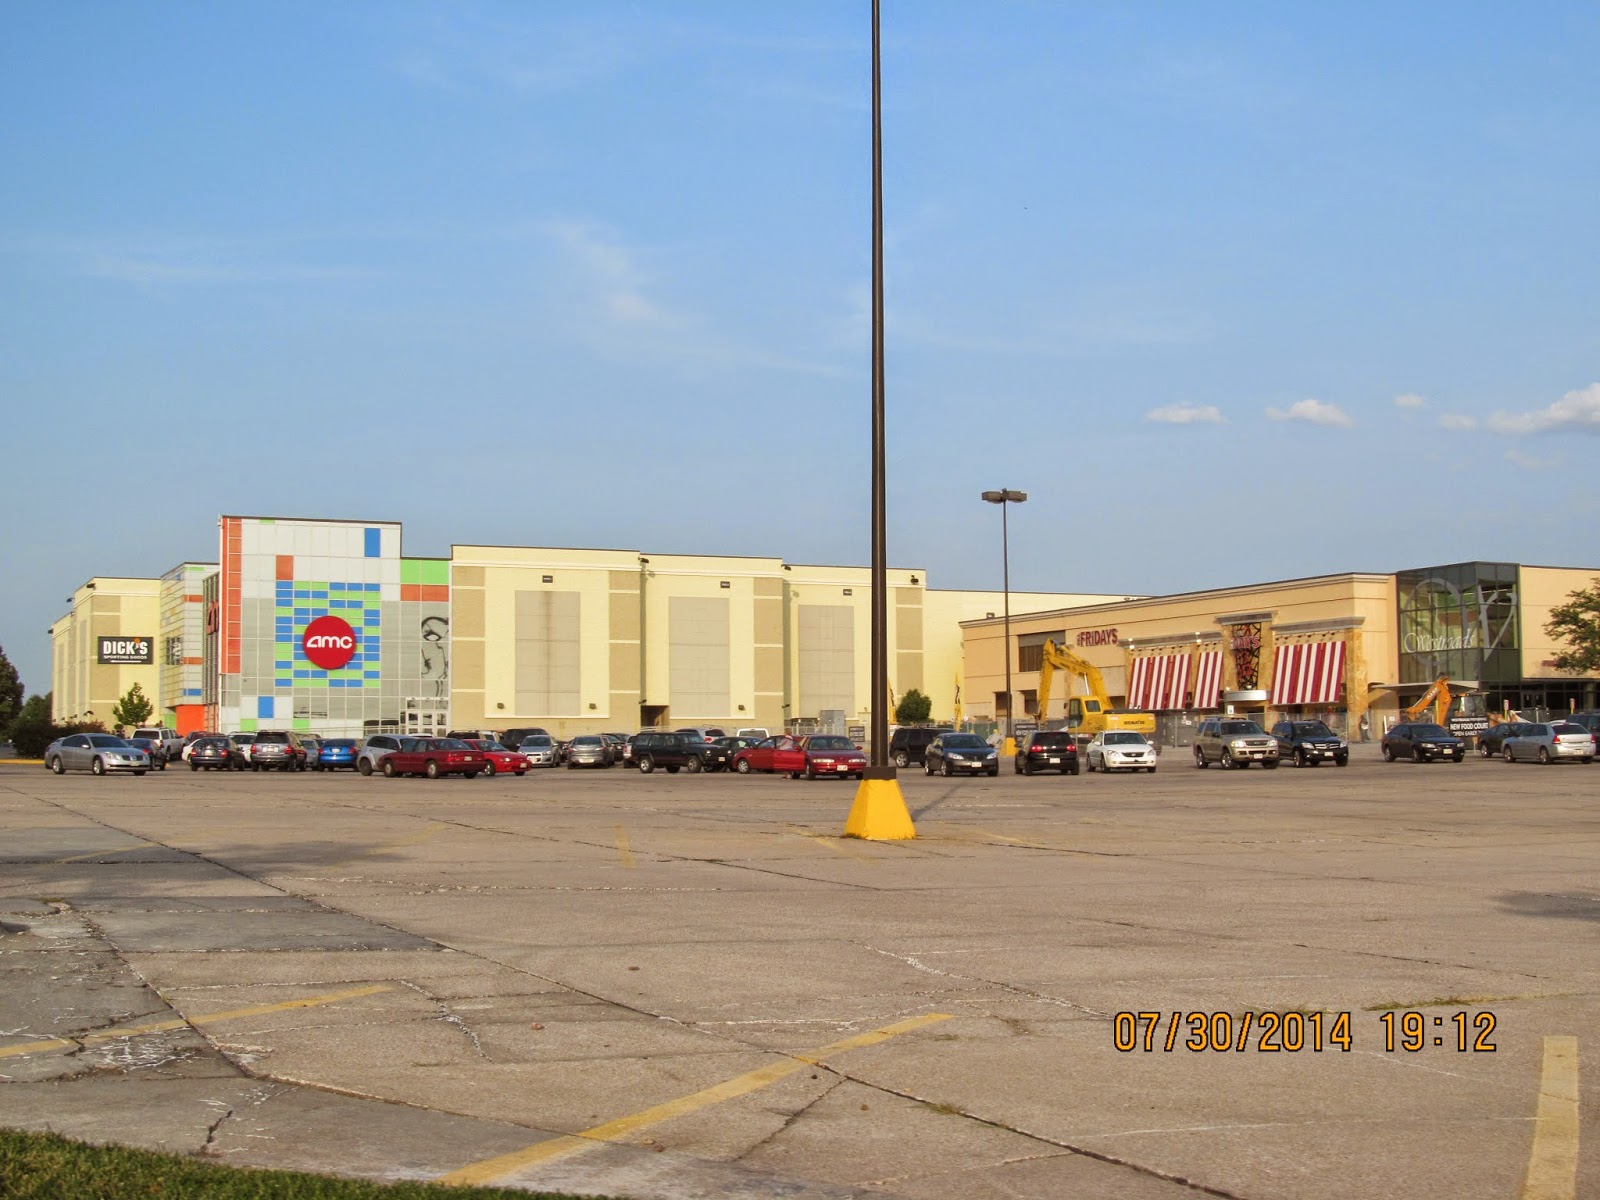 Von Maur - Westroads Mall Omaha, NE, Dblackwood